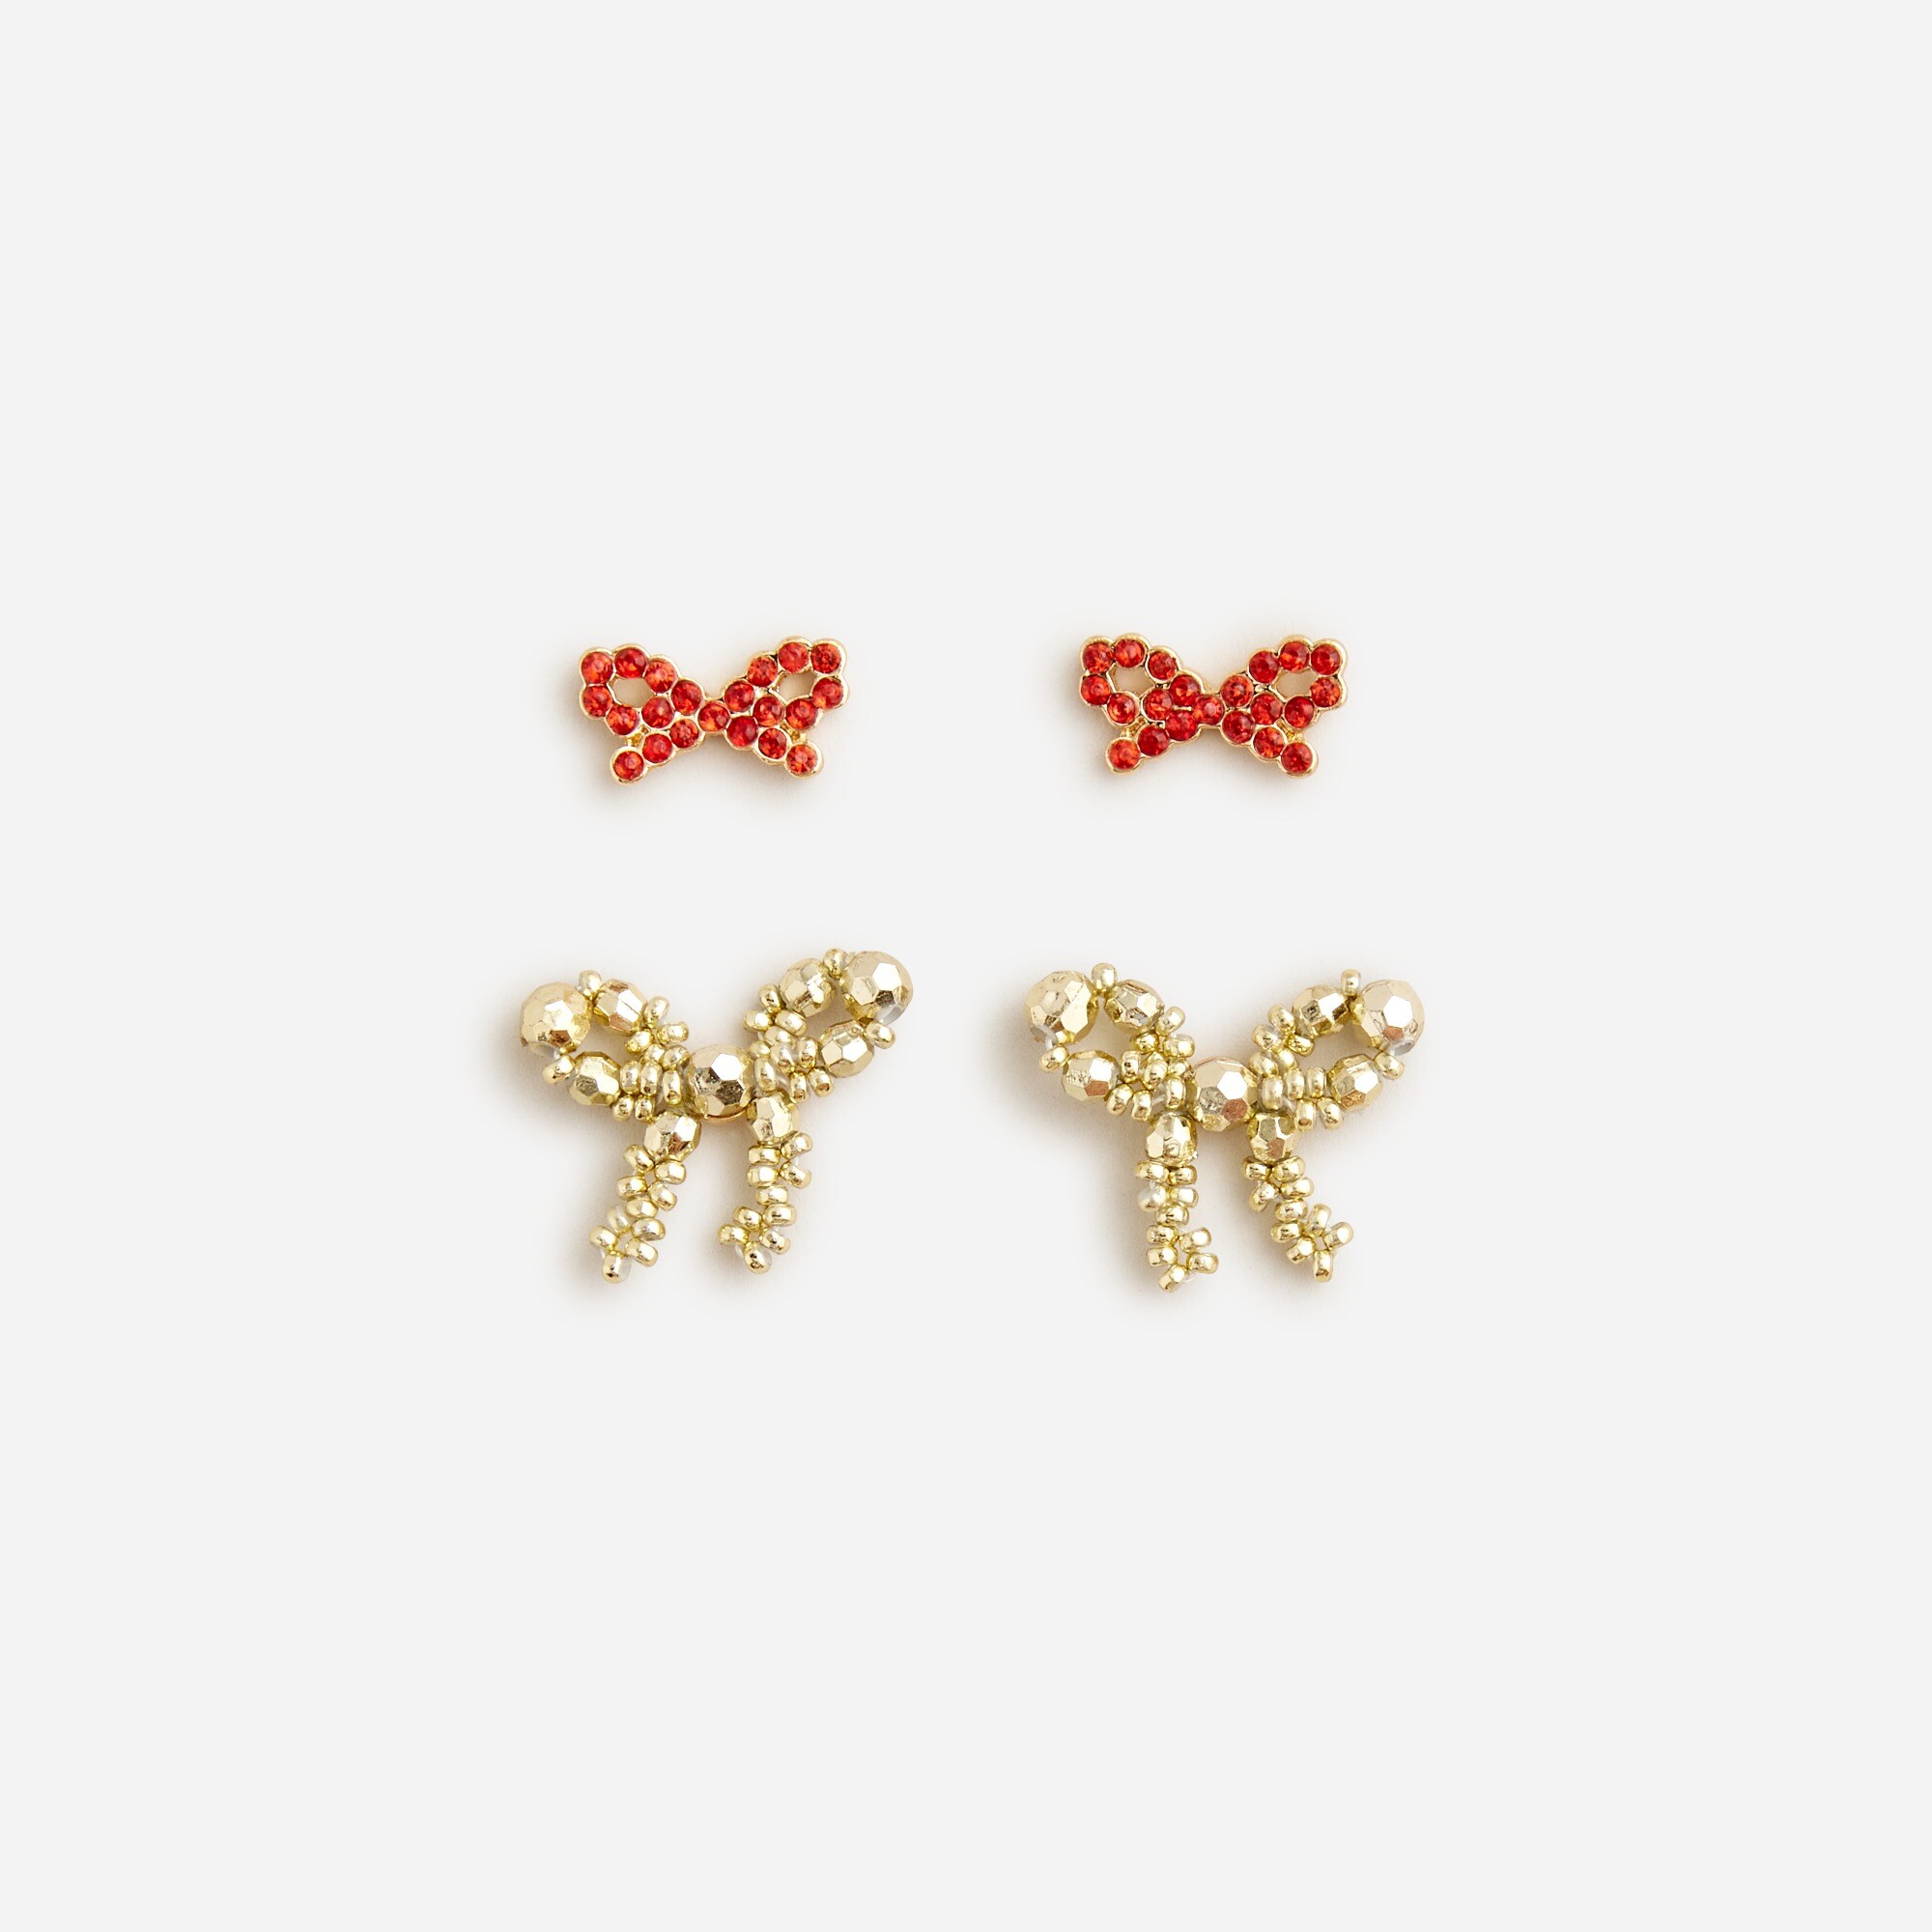  Girls' bow earrings two-pack